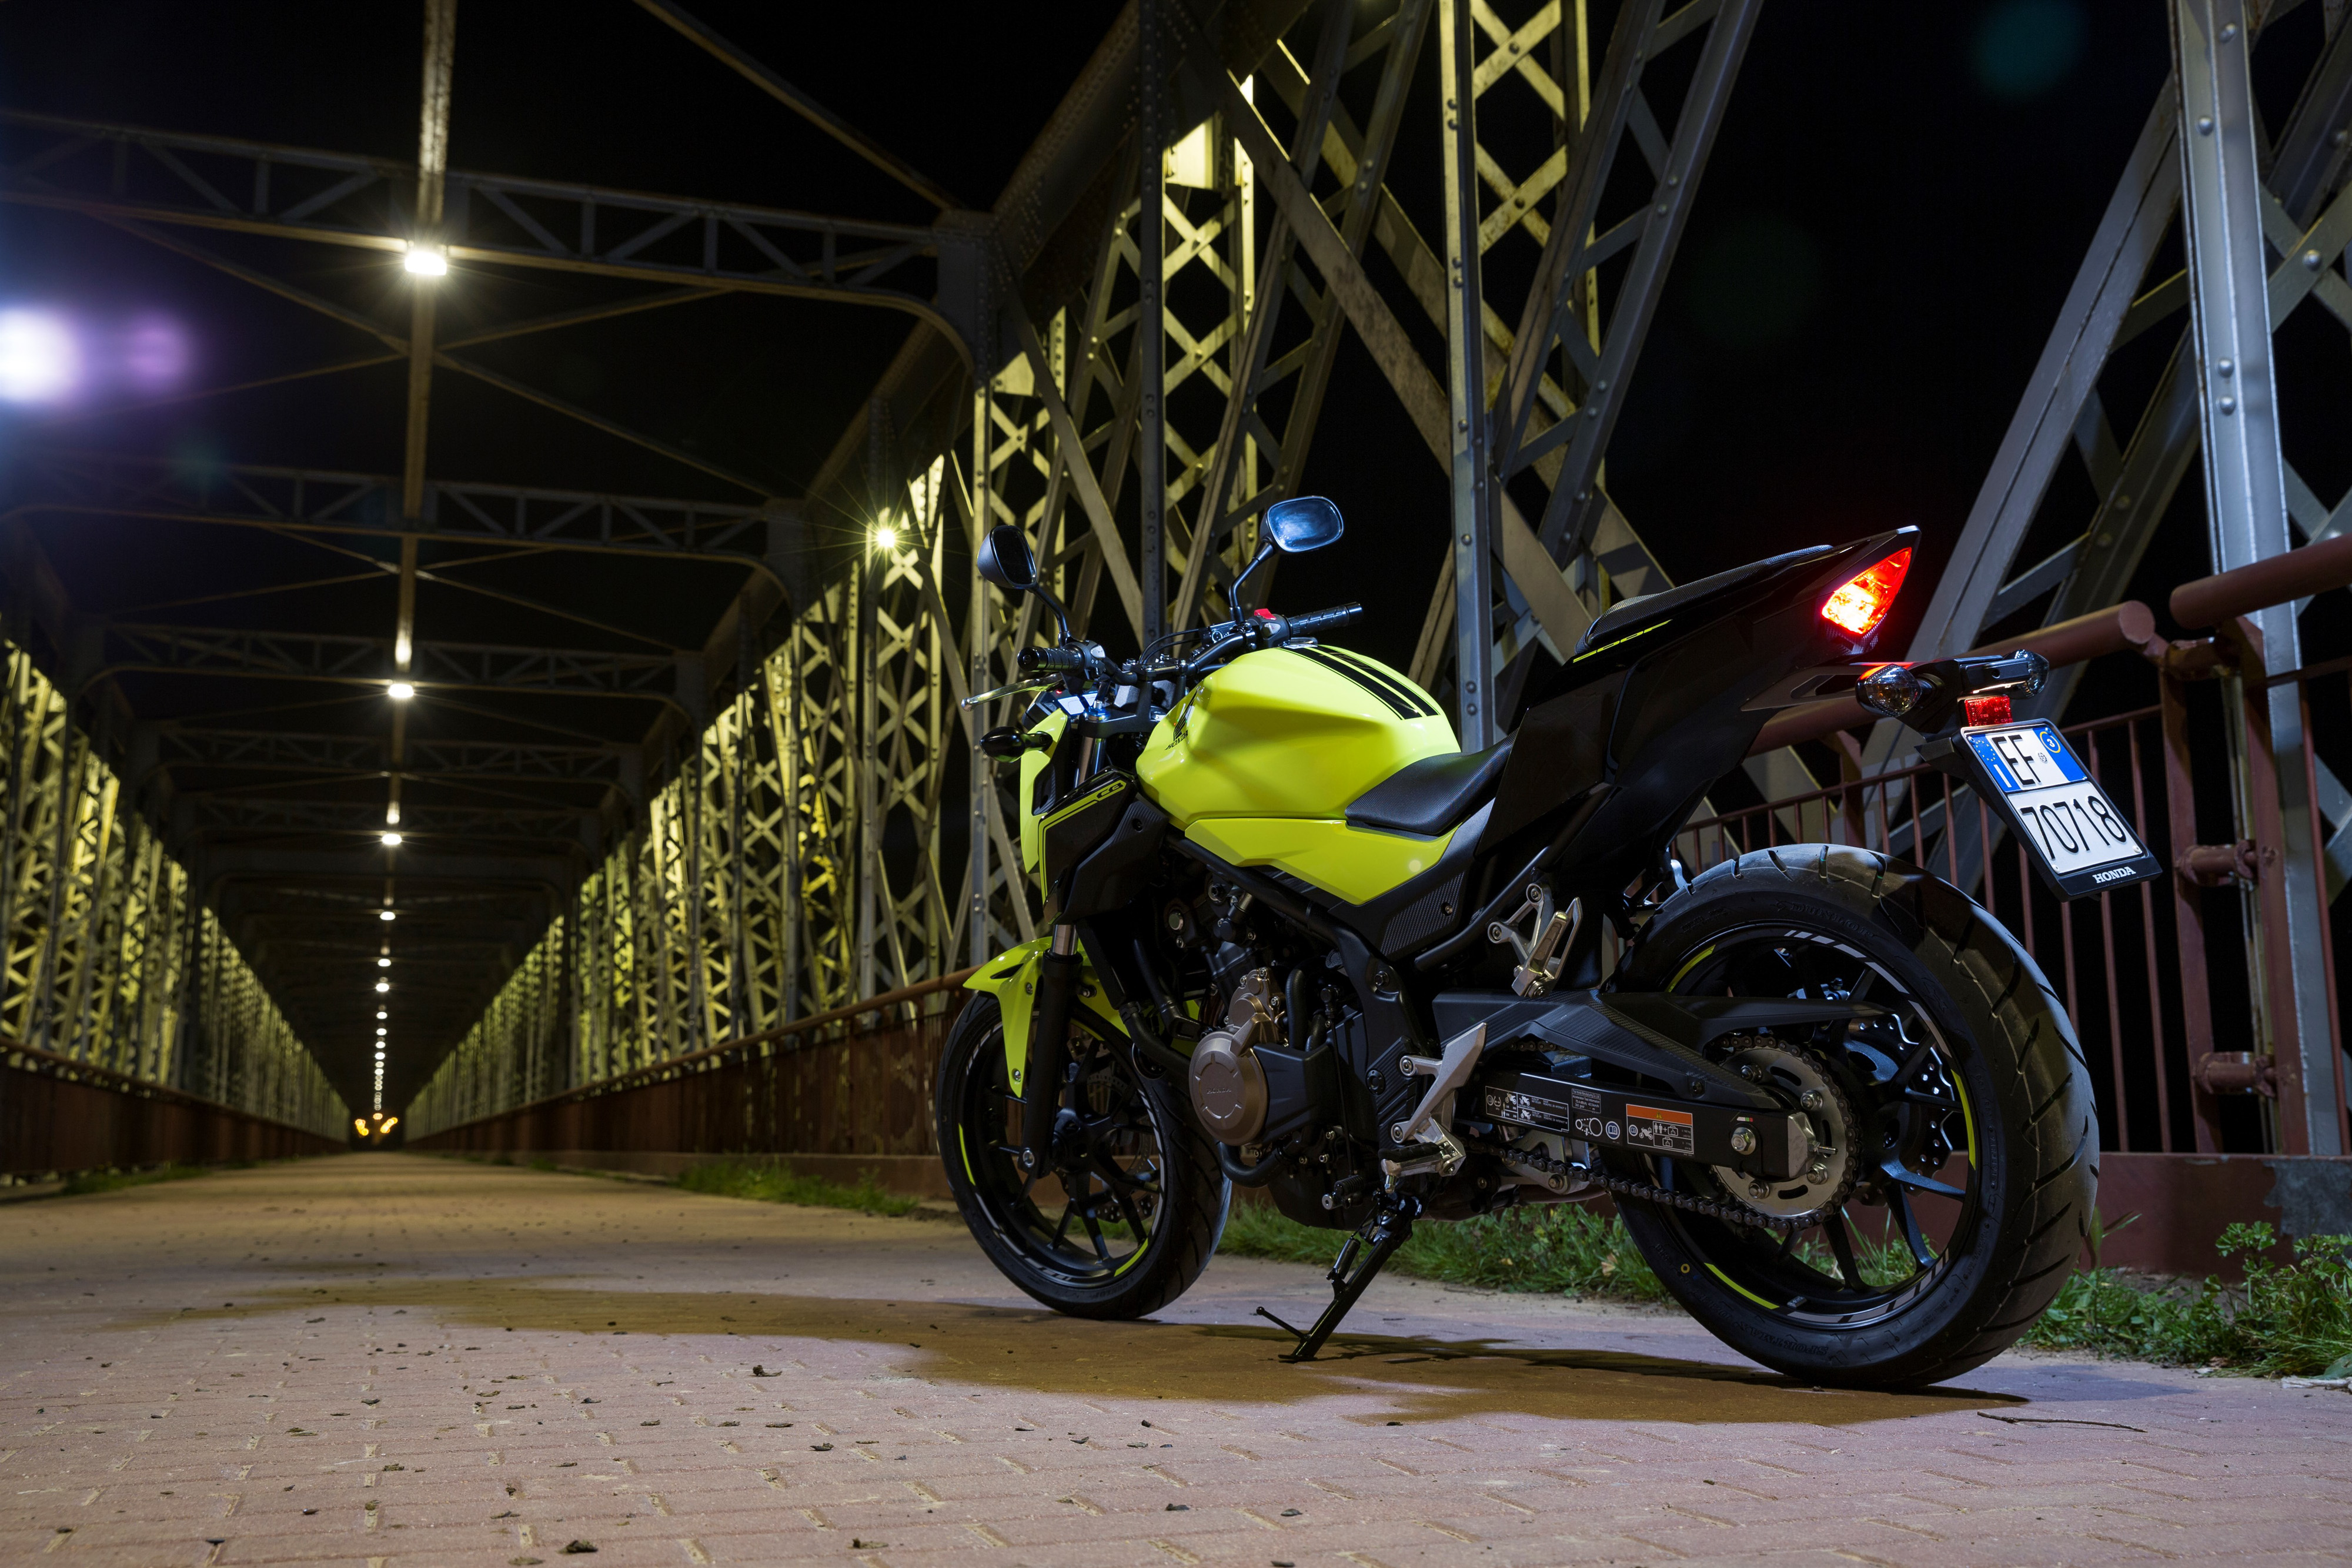 New Honda CB500F Bike Review